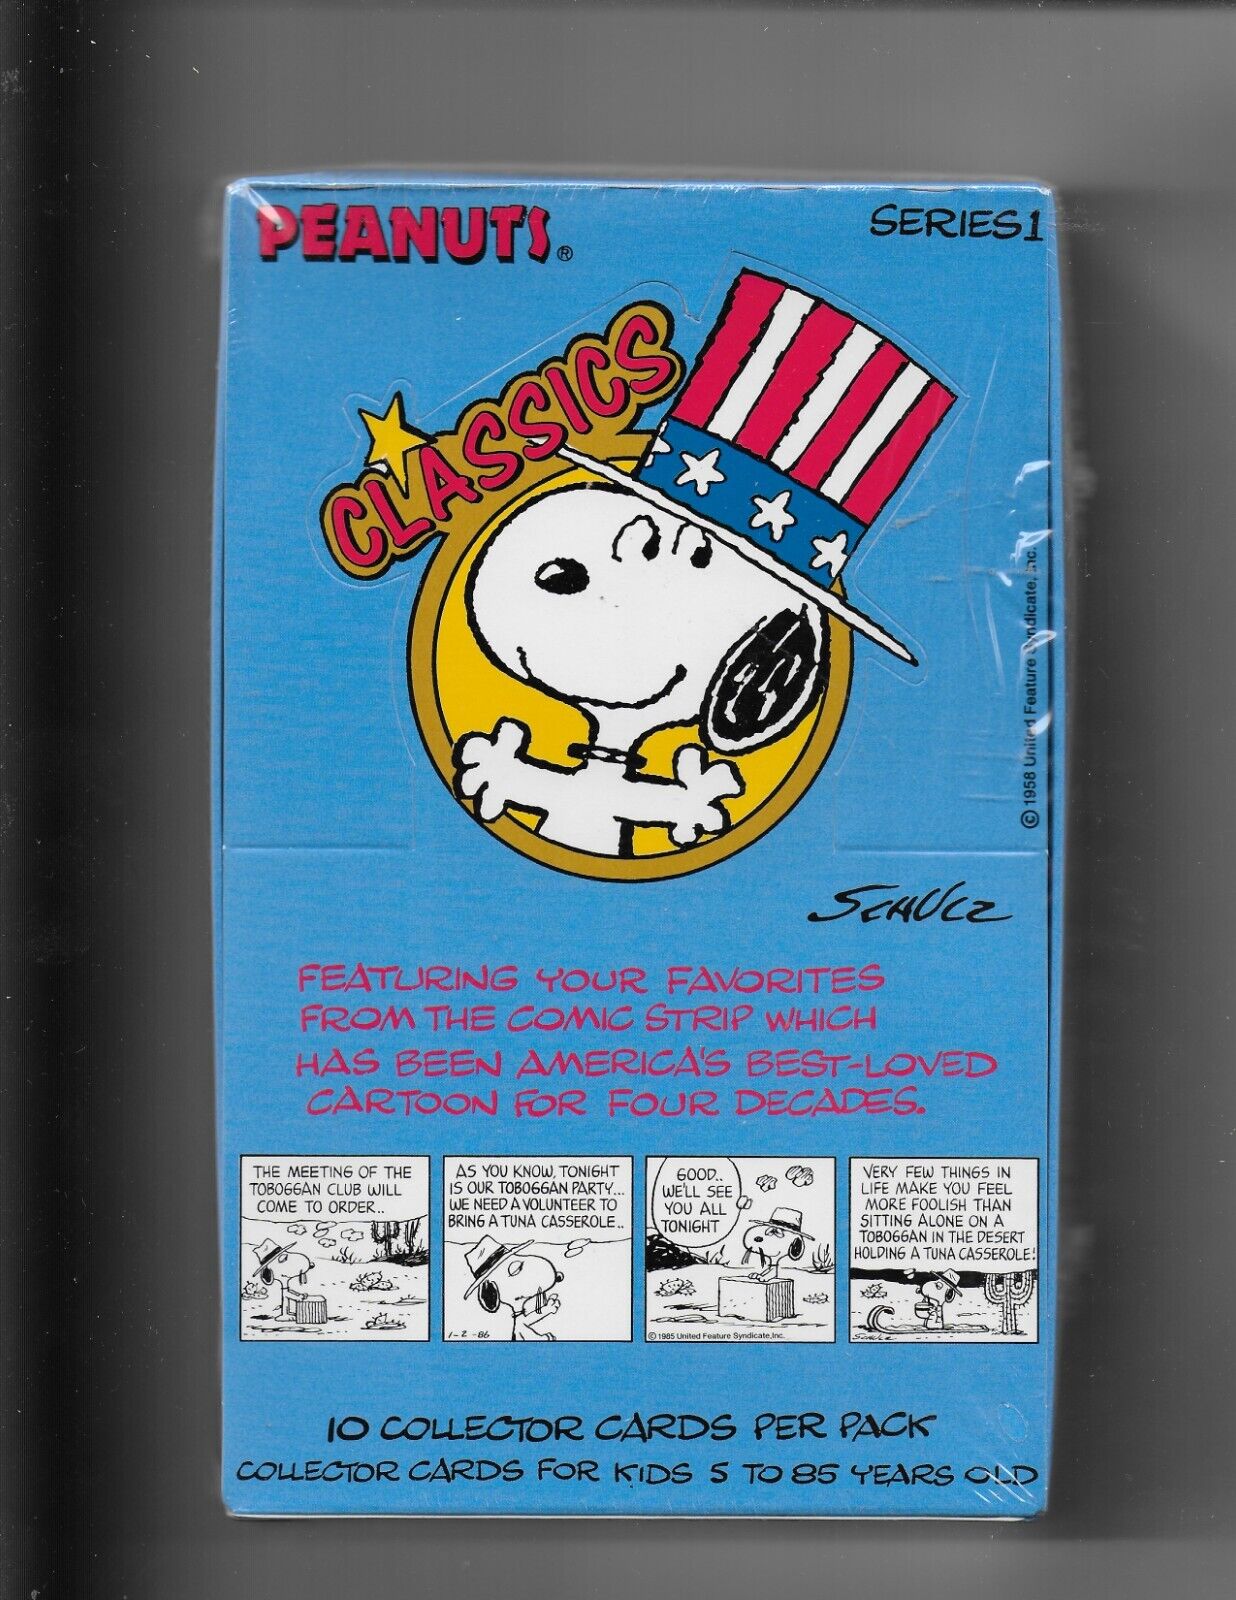 Peanuts Classics Series 1 Trading Cards, Sealed Box 36 Packs